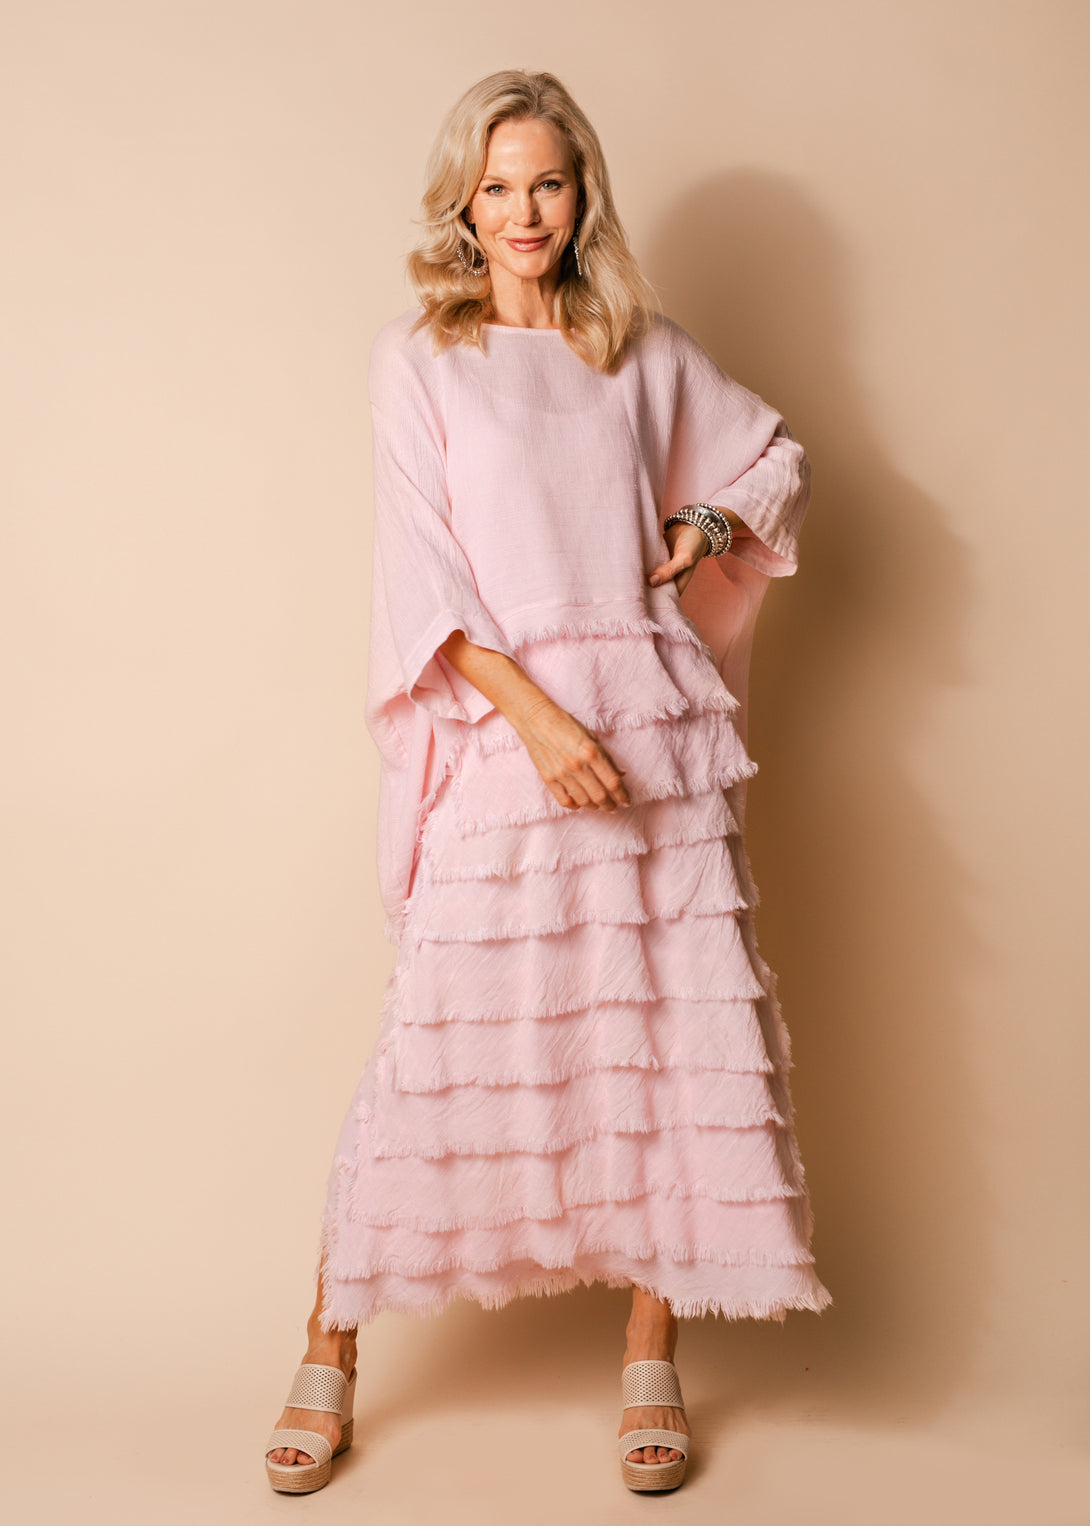 Julie Linen Skirt in Blush - Imagine Fashion